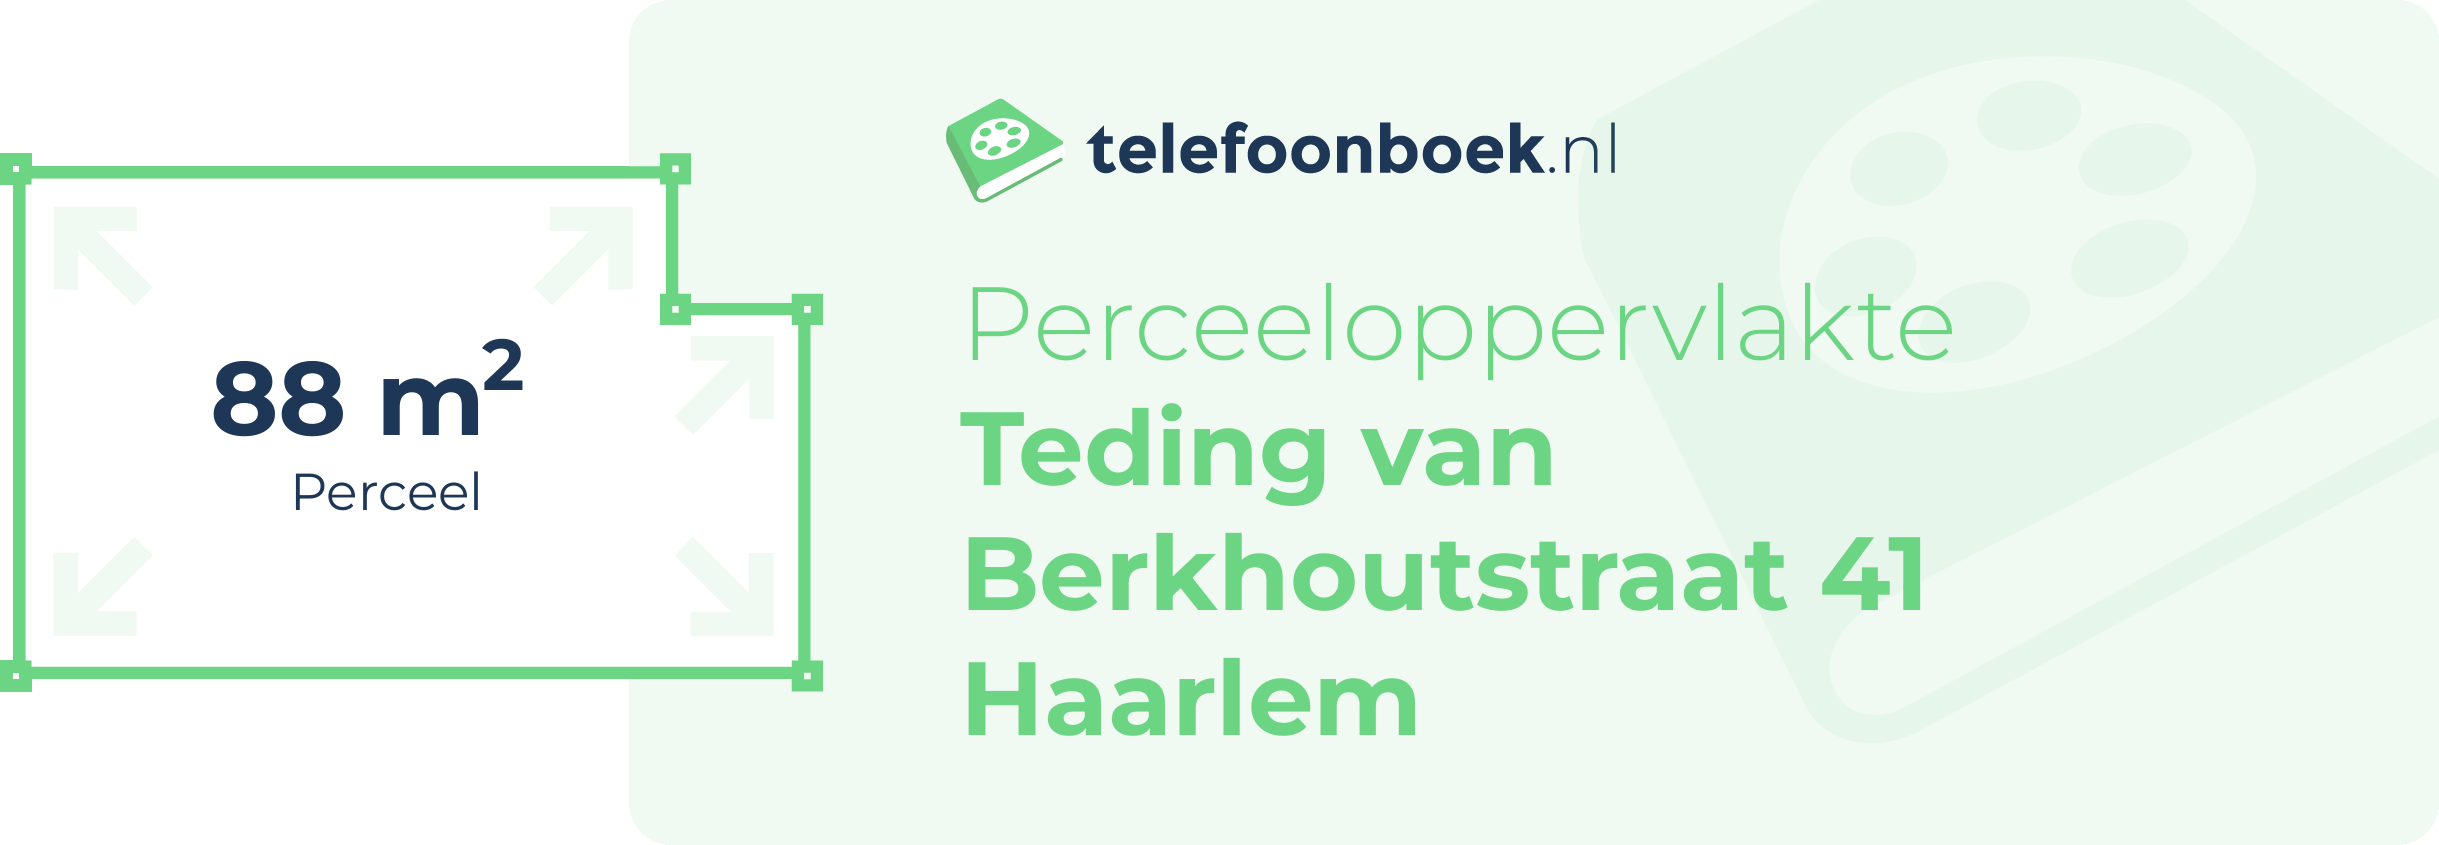 Perceeloppervlakte Teding Van Berkhoutstraat 41 Haarlem